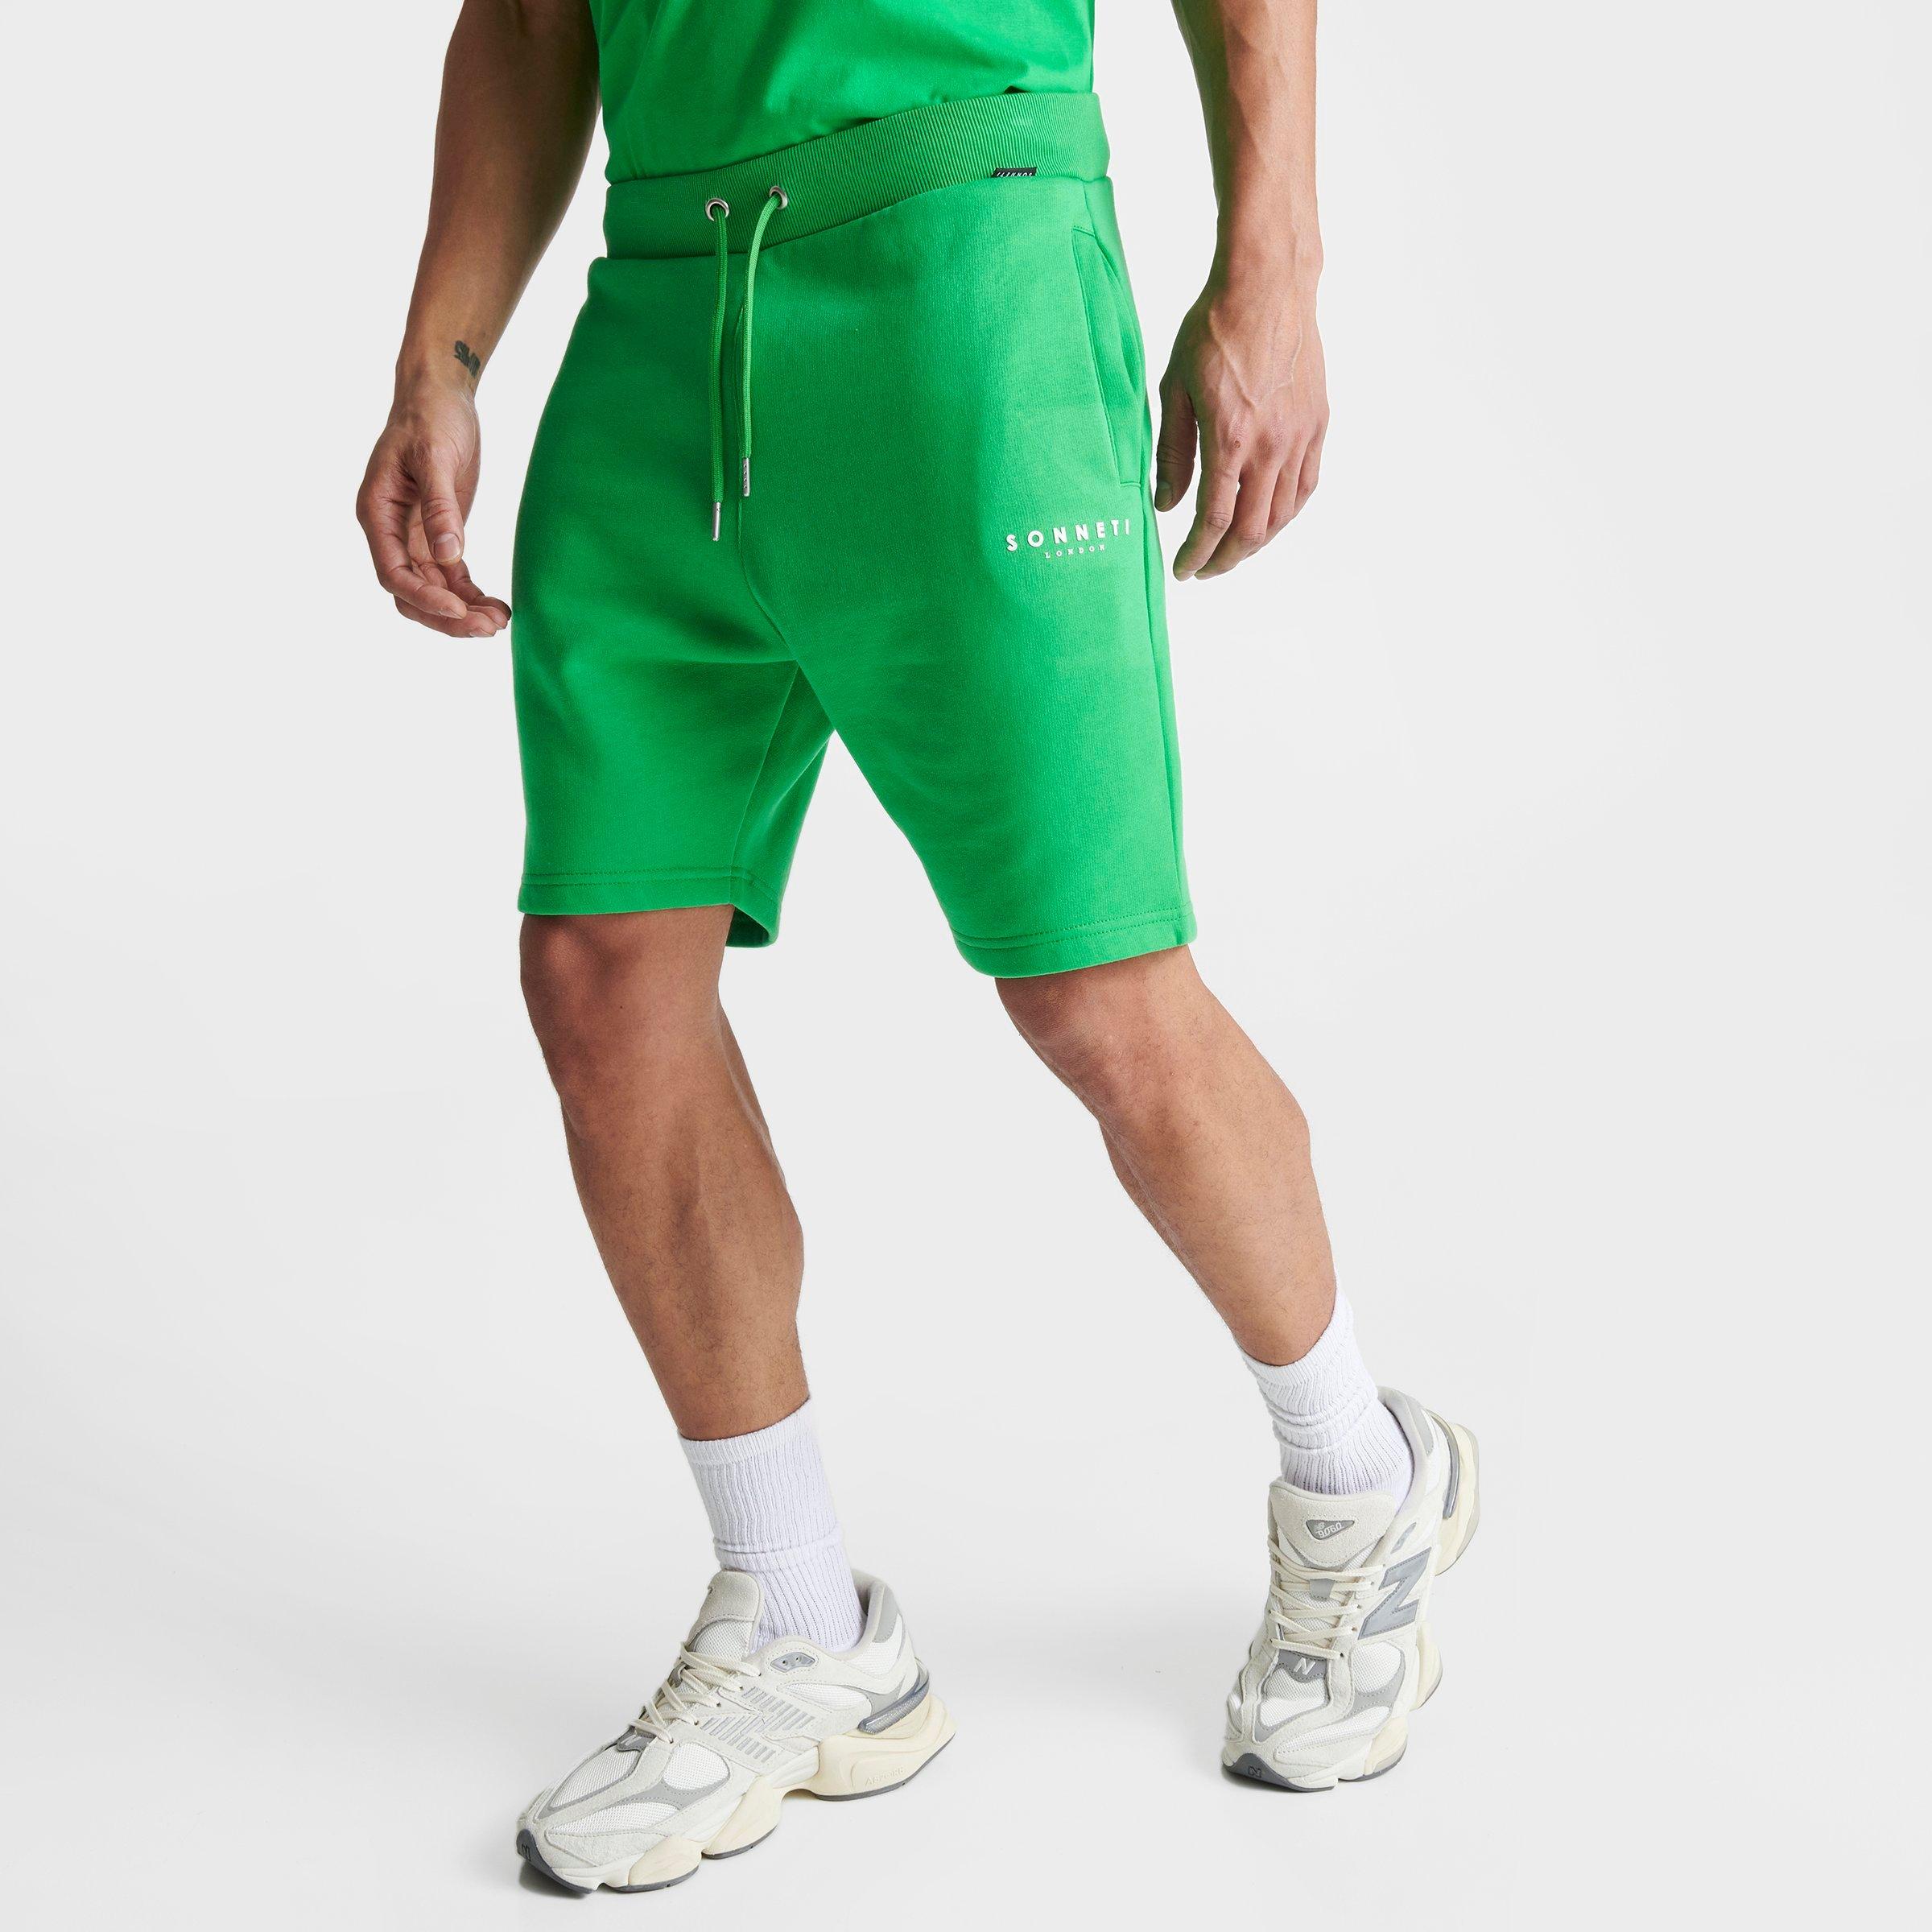 Sonneti Men's 7" Brom Shorts In Green